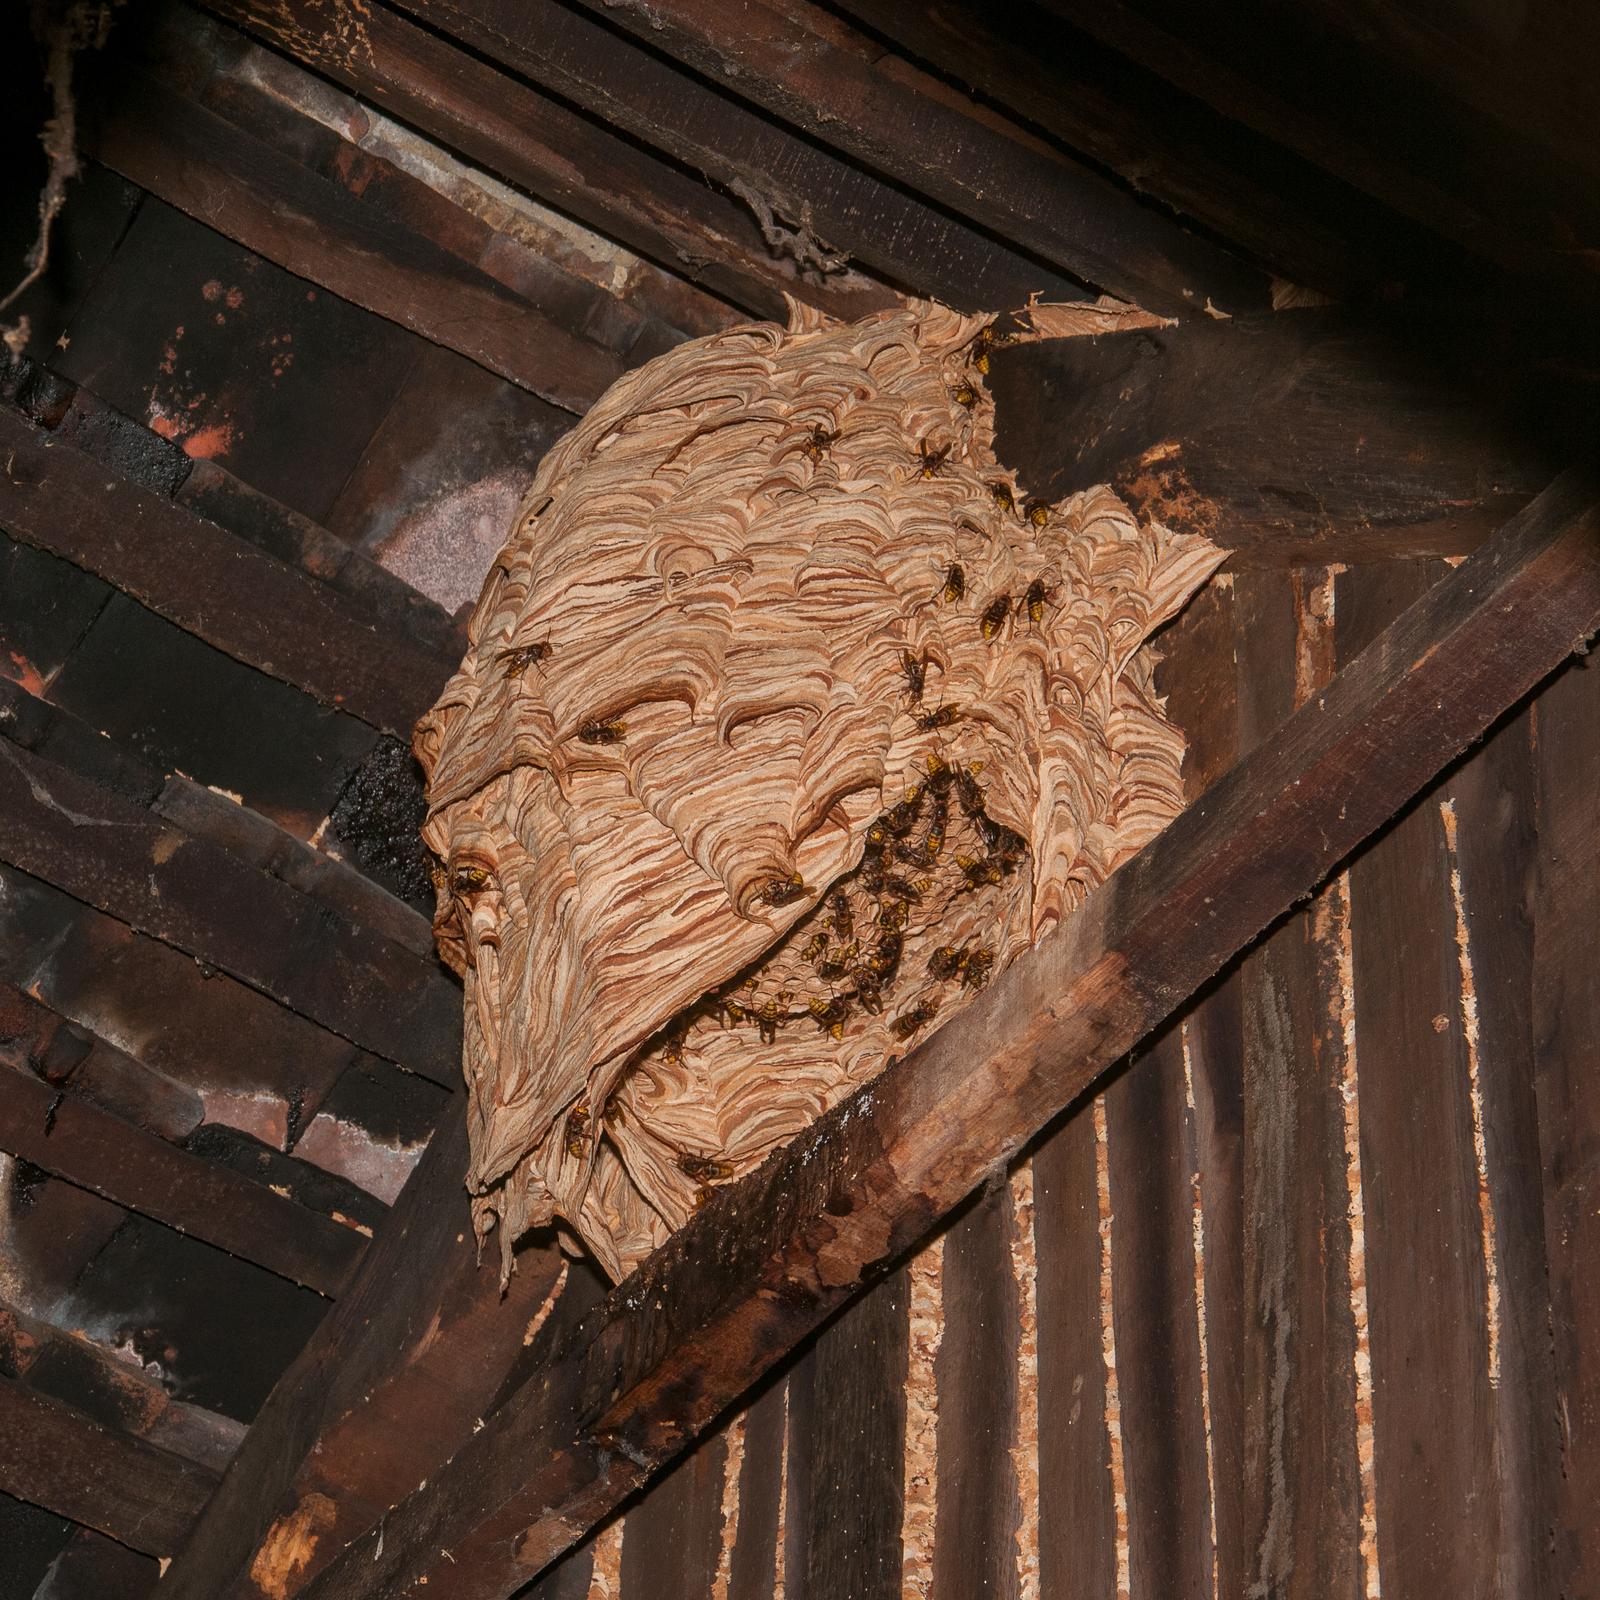 Hornet's nest - a dangerous pest on the roof of the house